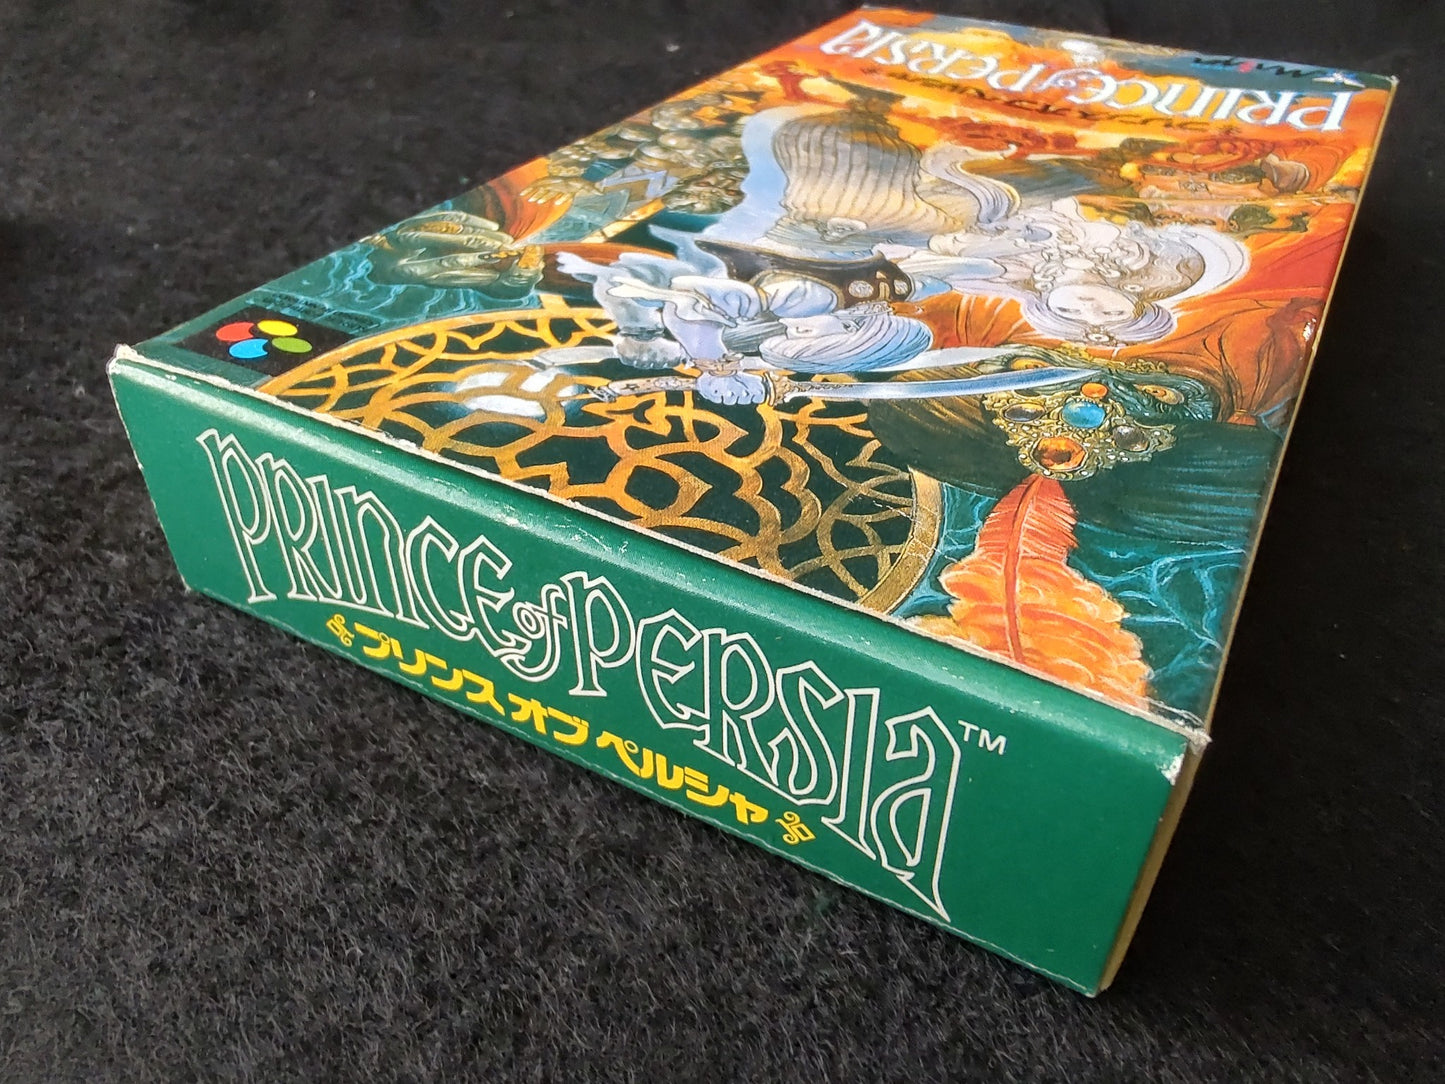 Prince of Persia Super Famicom SFC Cartridge w/,Manual, Box set, Working-f1014-